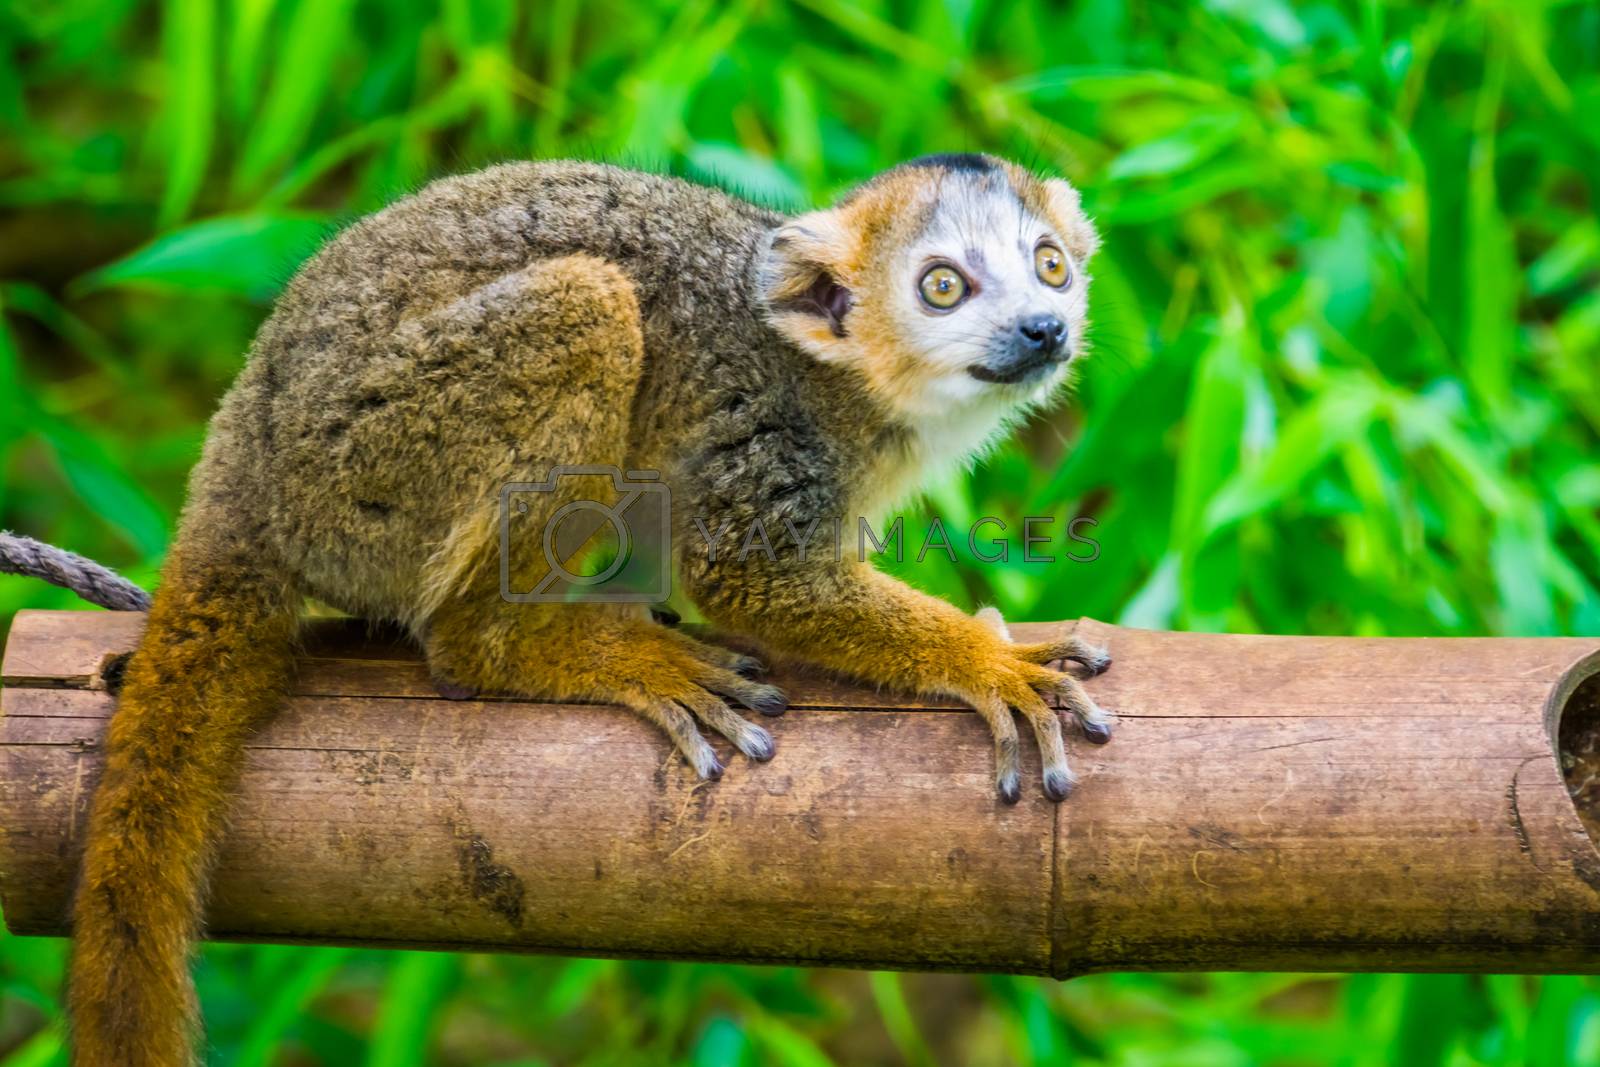 Royalty free image of crowned lemur in closeup, Cute monkey, Endangered primate specie from Madagascar by charlottebleijenberg